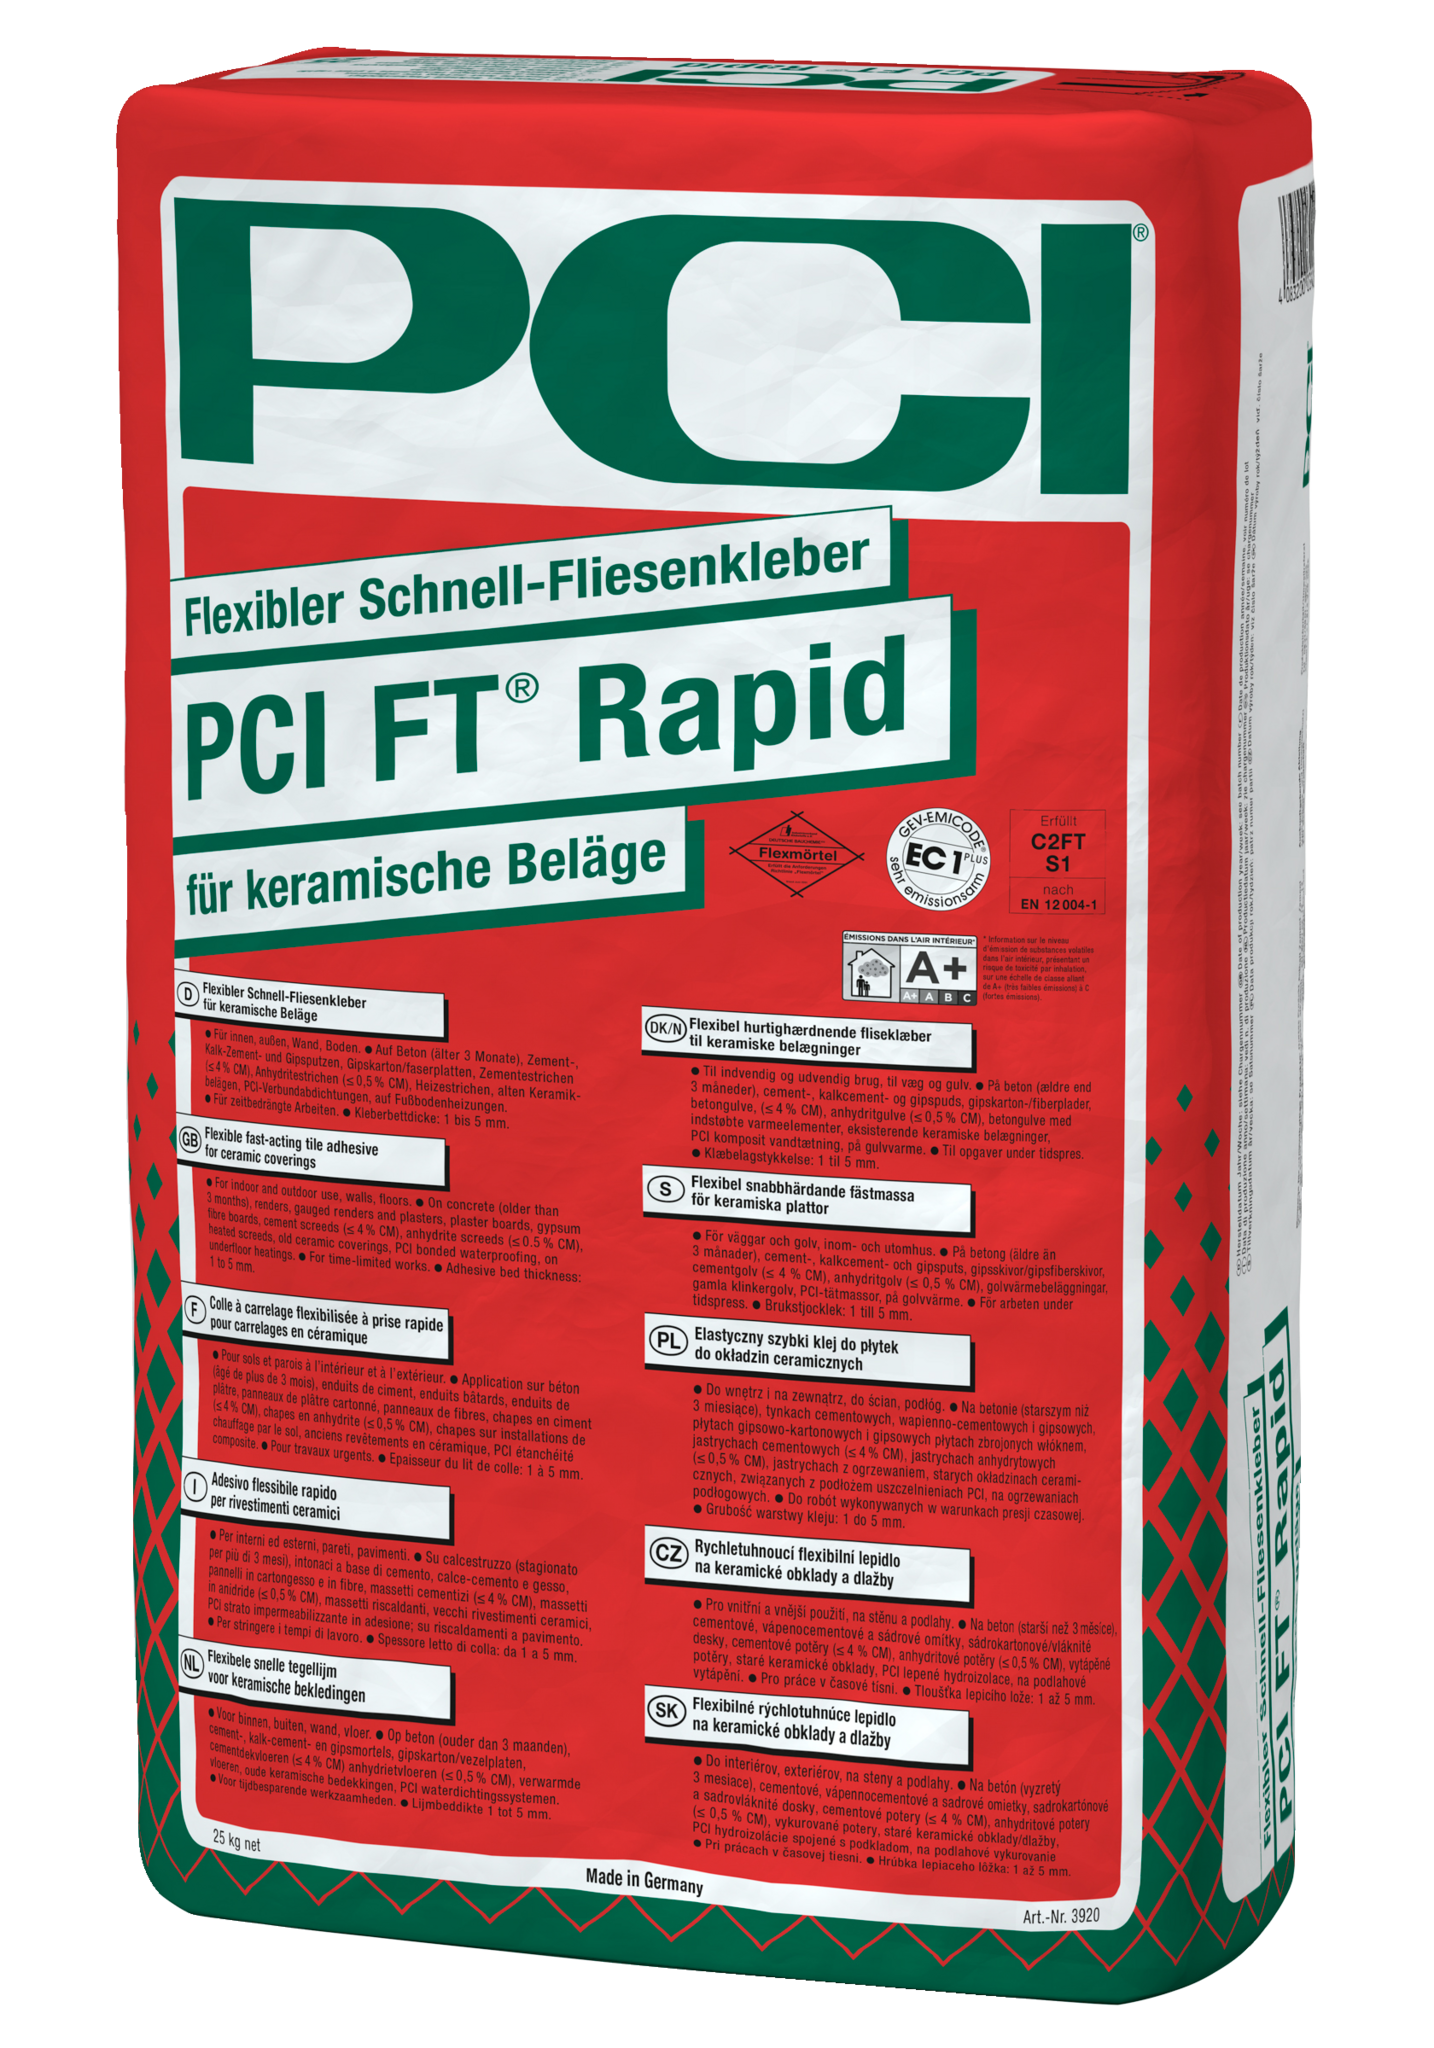 PCI FT® Rapid